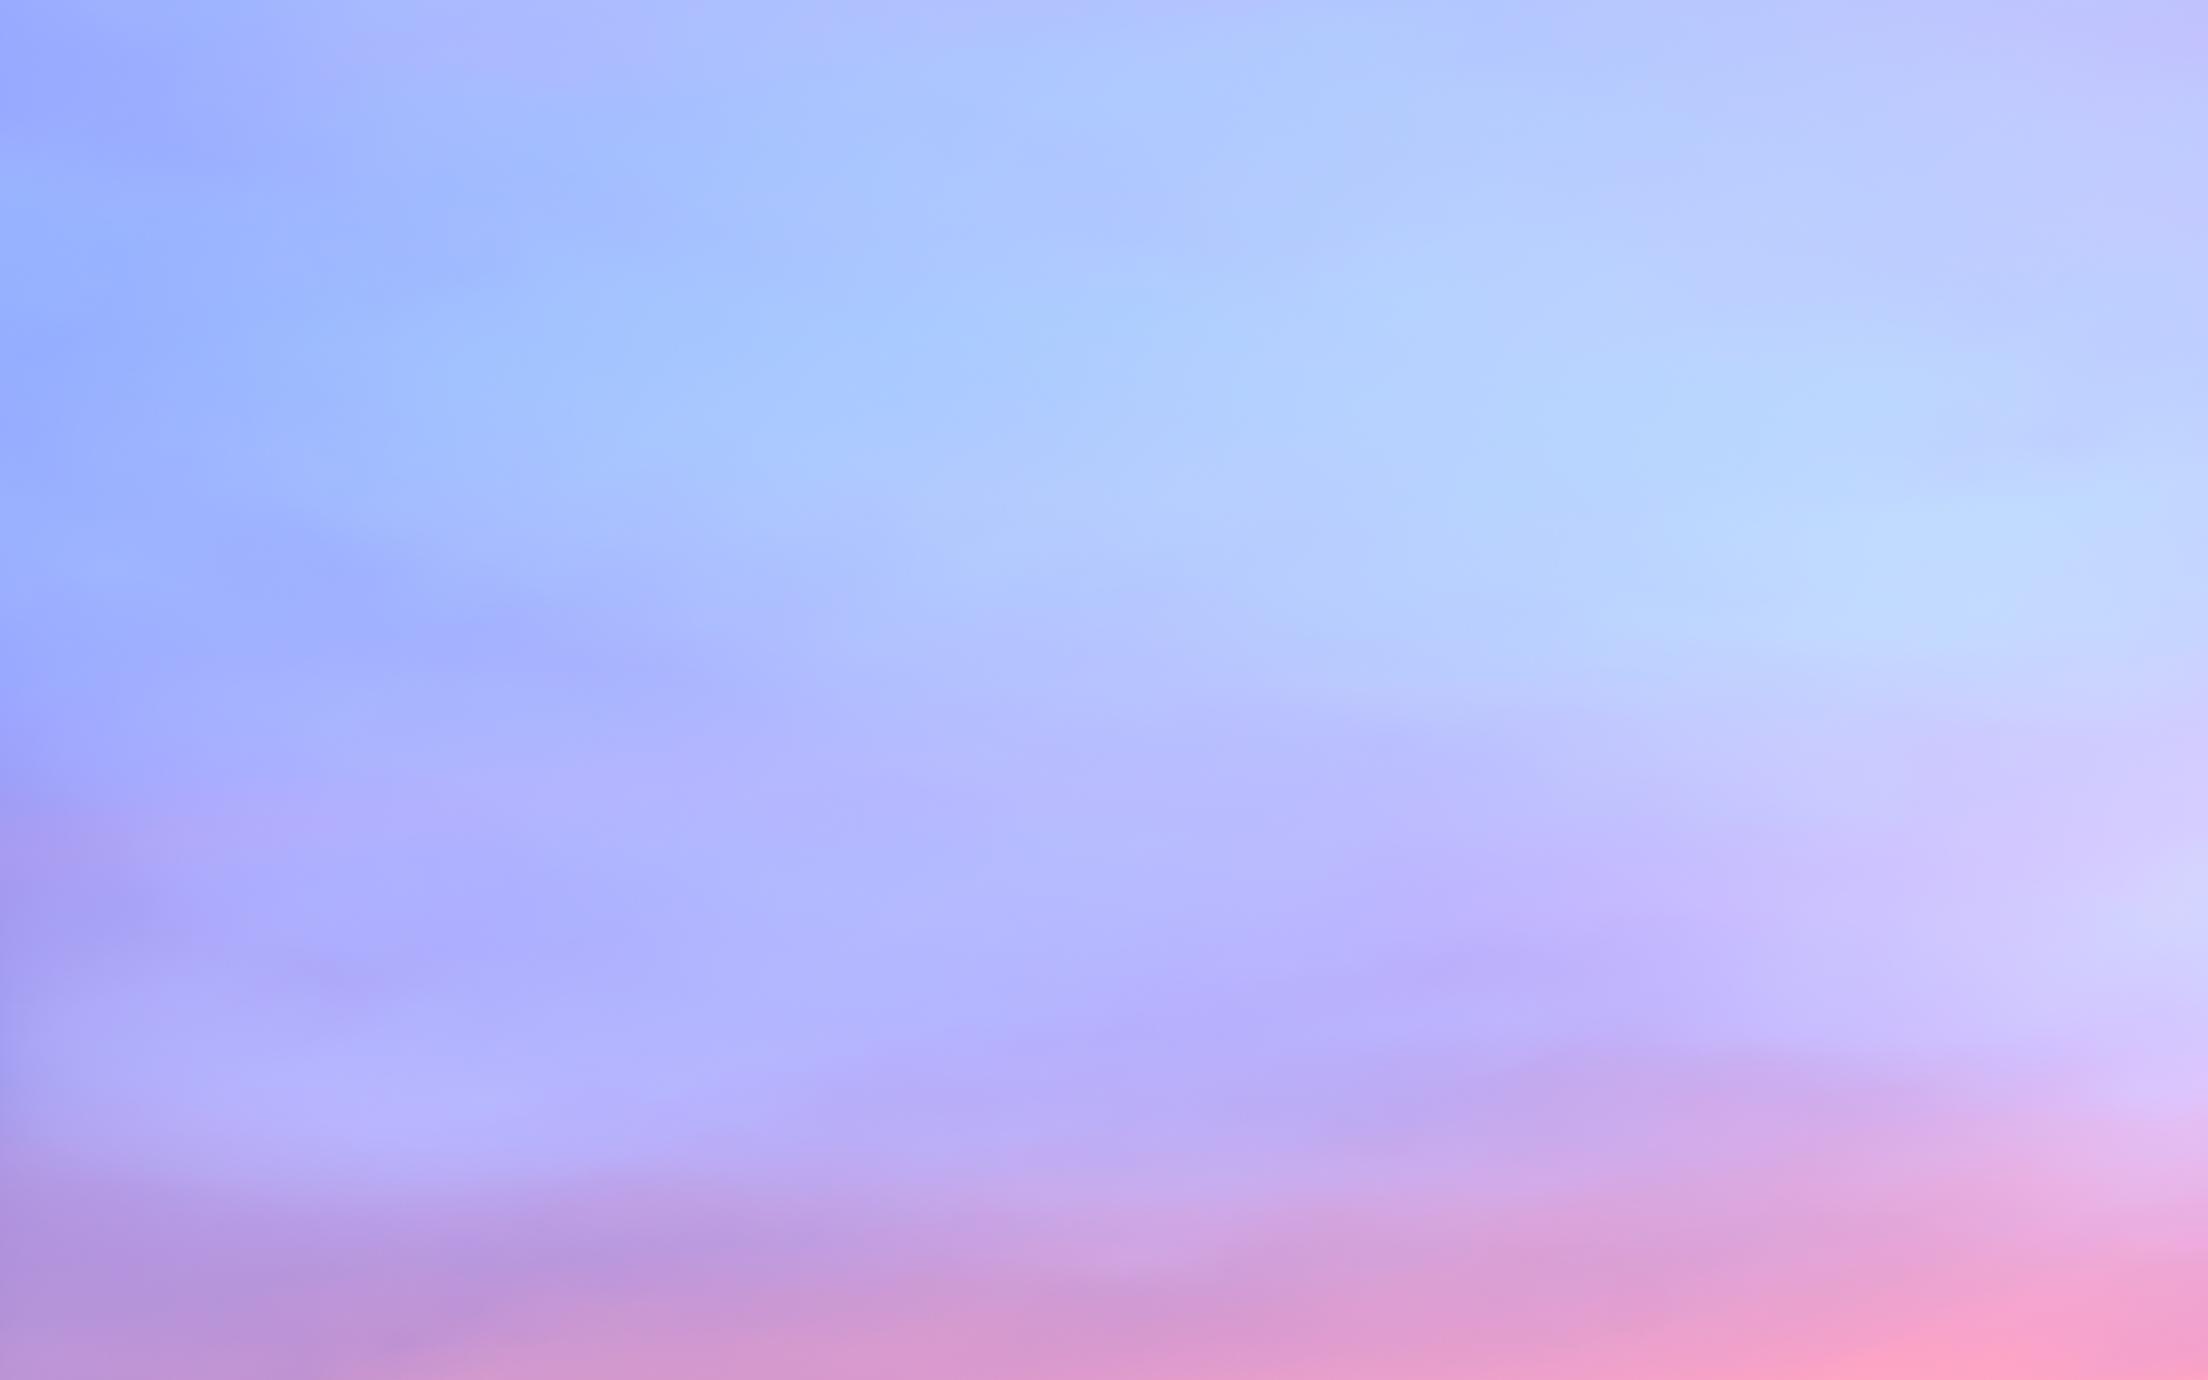 image of a sunset sky